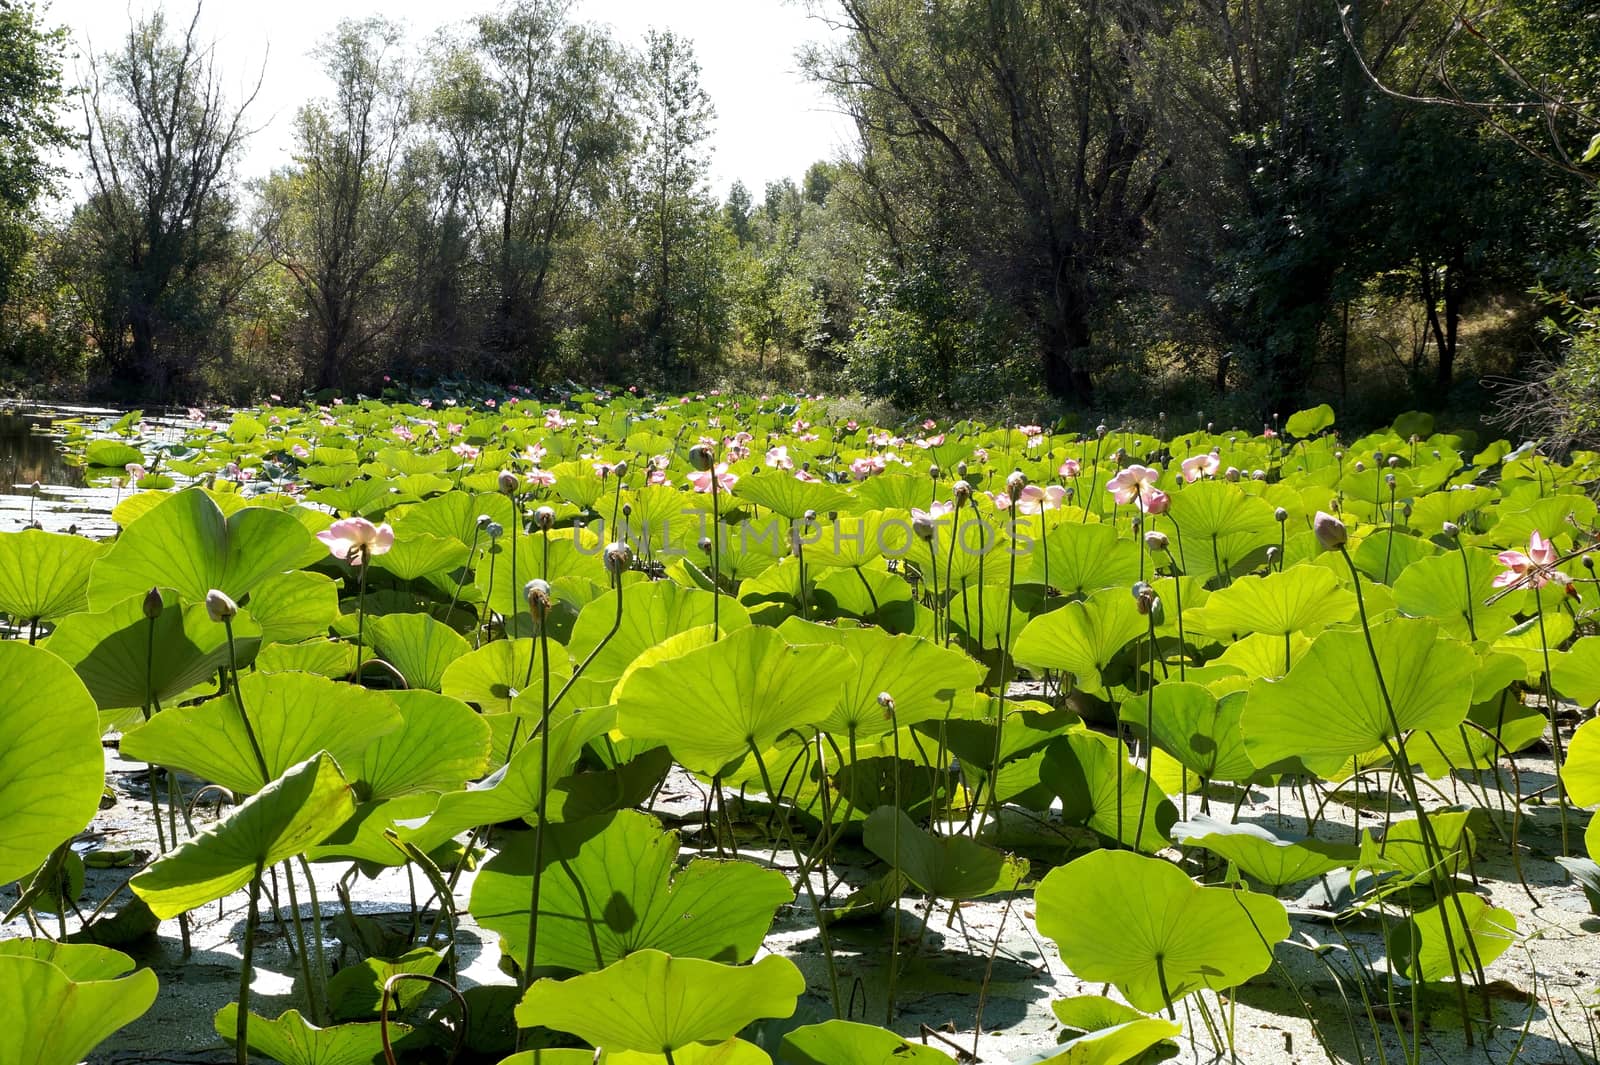 Lotuses in a flood plain of the Volga River by Vadimdem